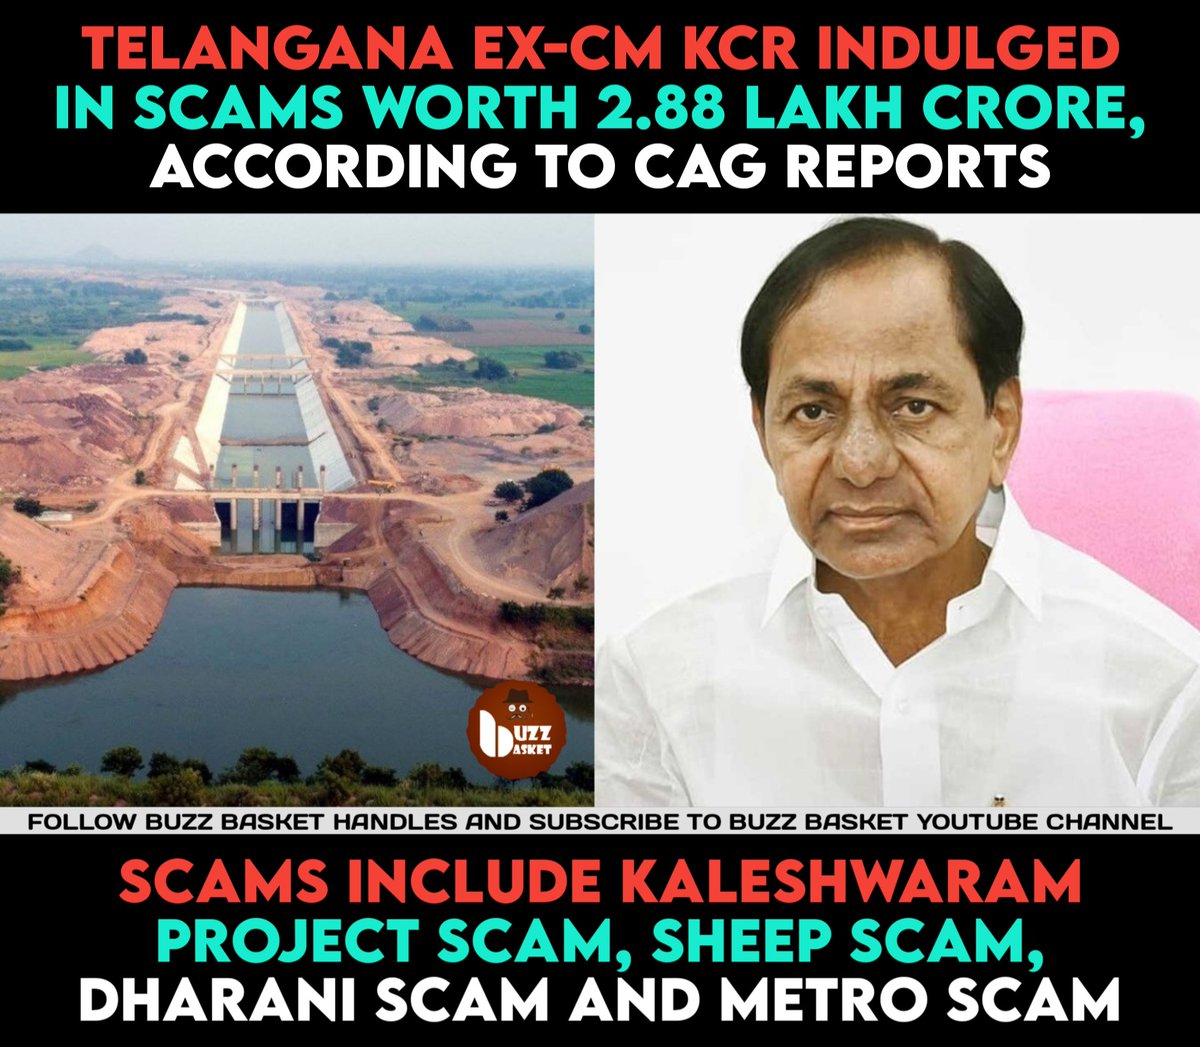 #Telangana Ex-CM #KCR indulged in scams worth 2.88 lakh crore. 

#Hyderabad #KaleshwaramScam #KaleshwaramProject